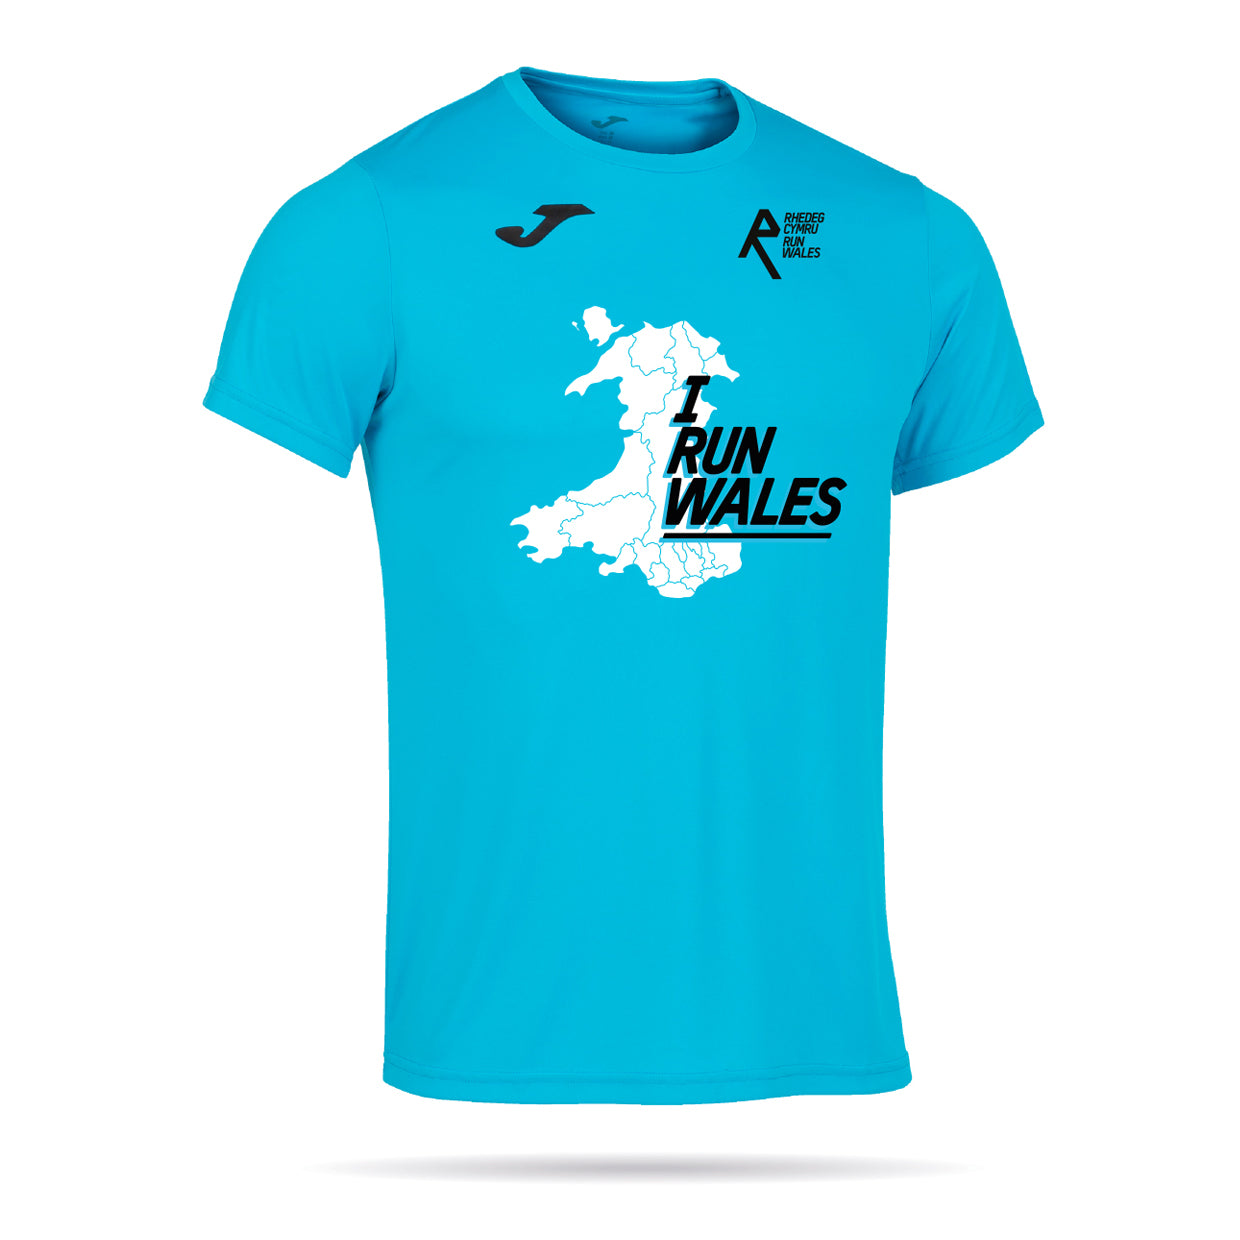 Run Wales Unisex Running T-Shirt - Turquoise